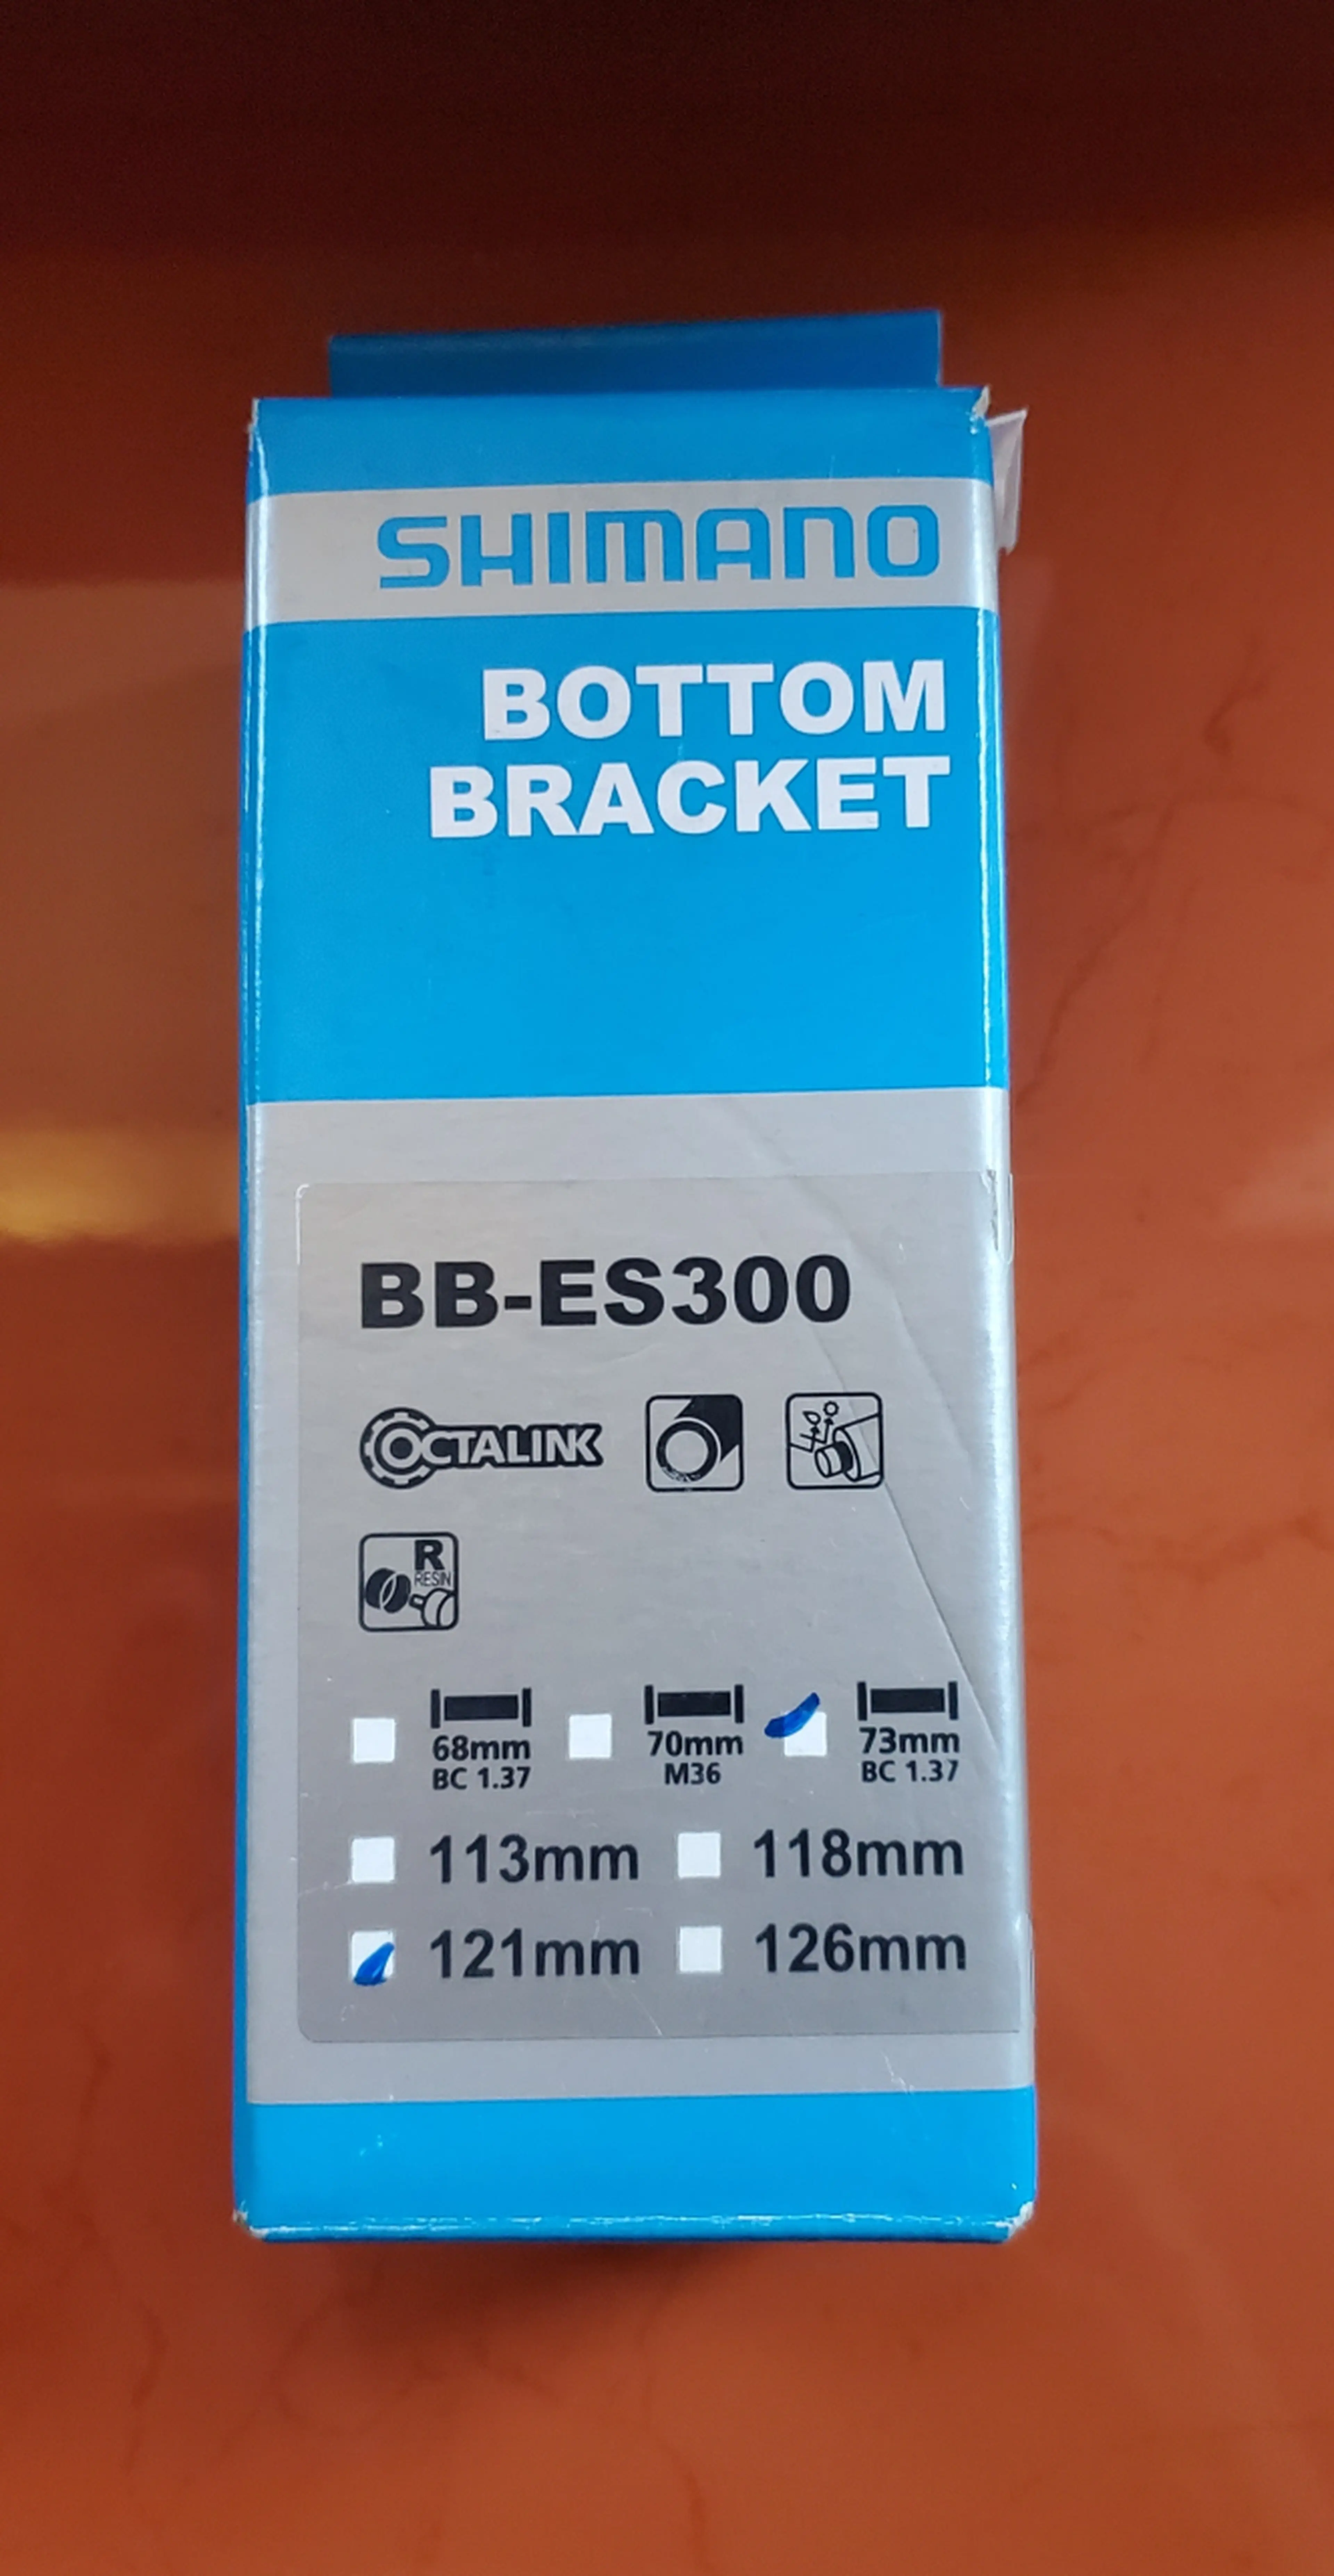 2. Butuc pedalier Shimano BB-ES300 73-121 mm octalink/hollowtech